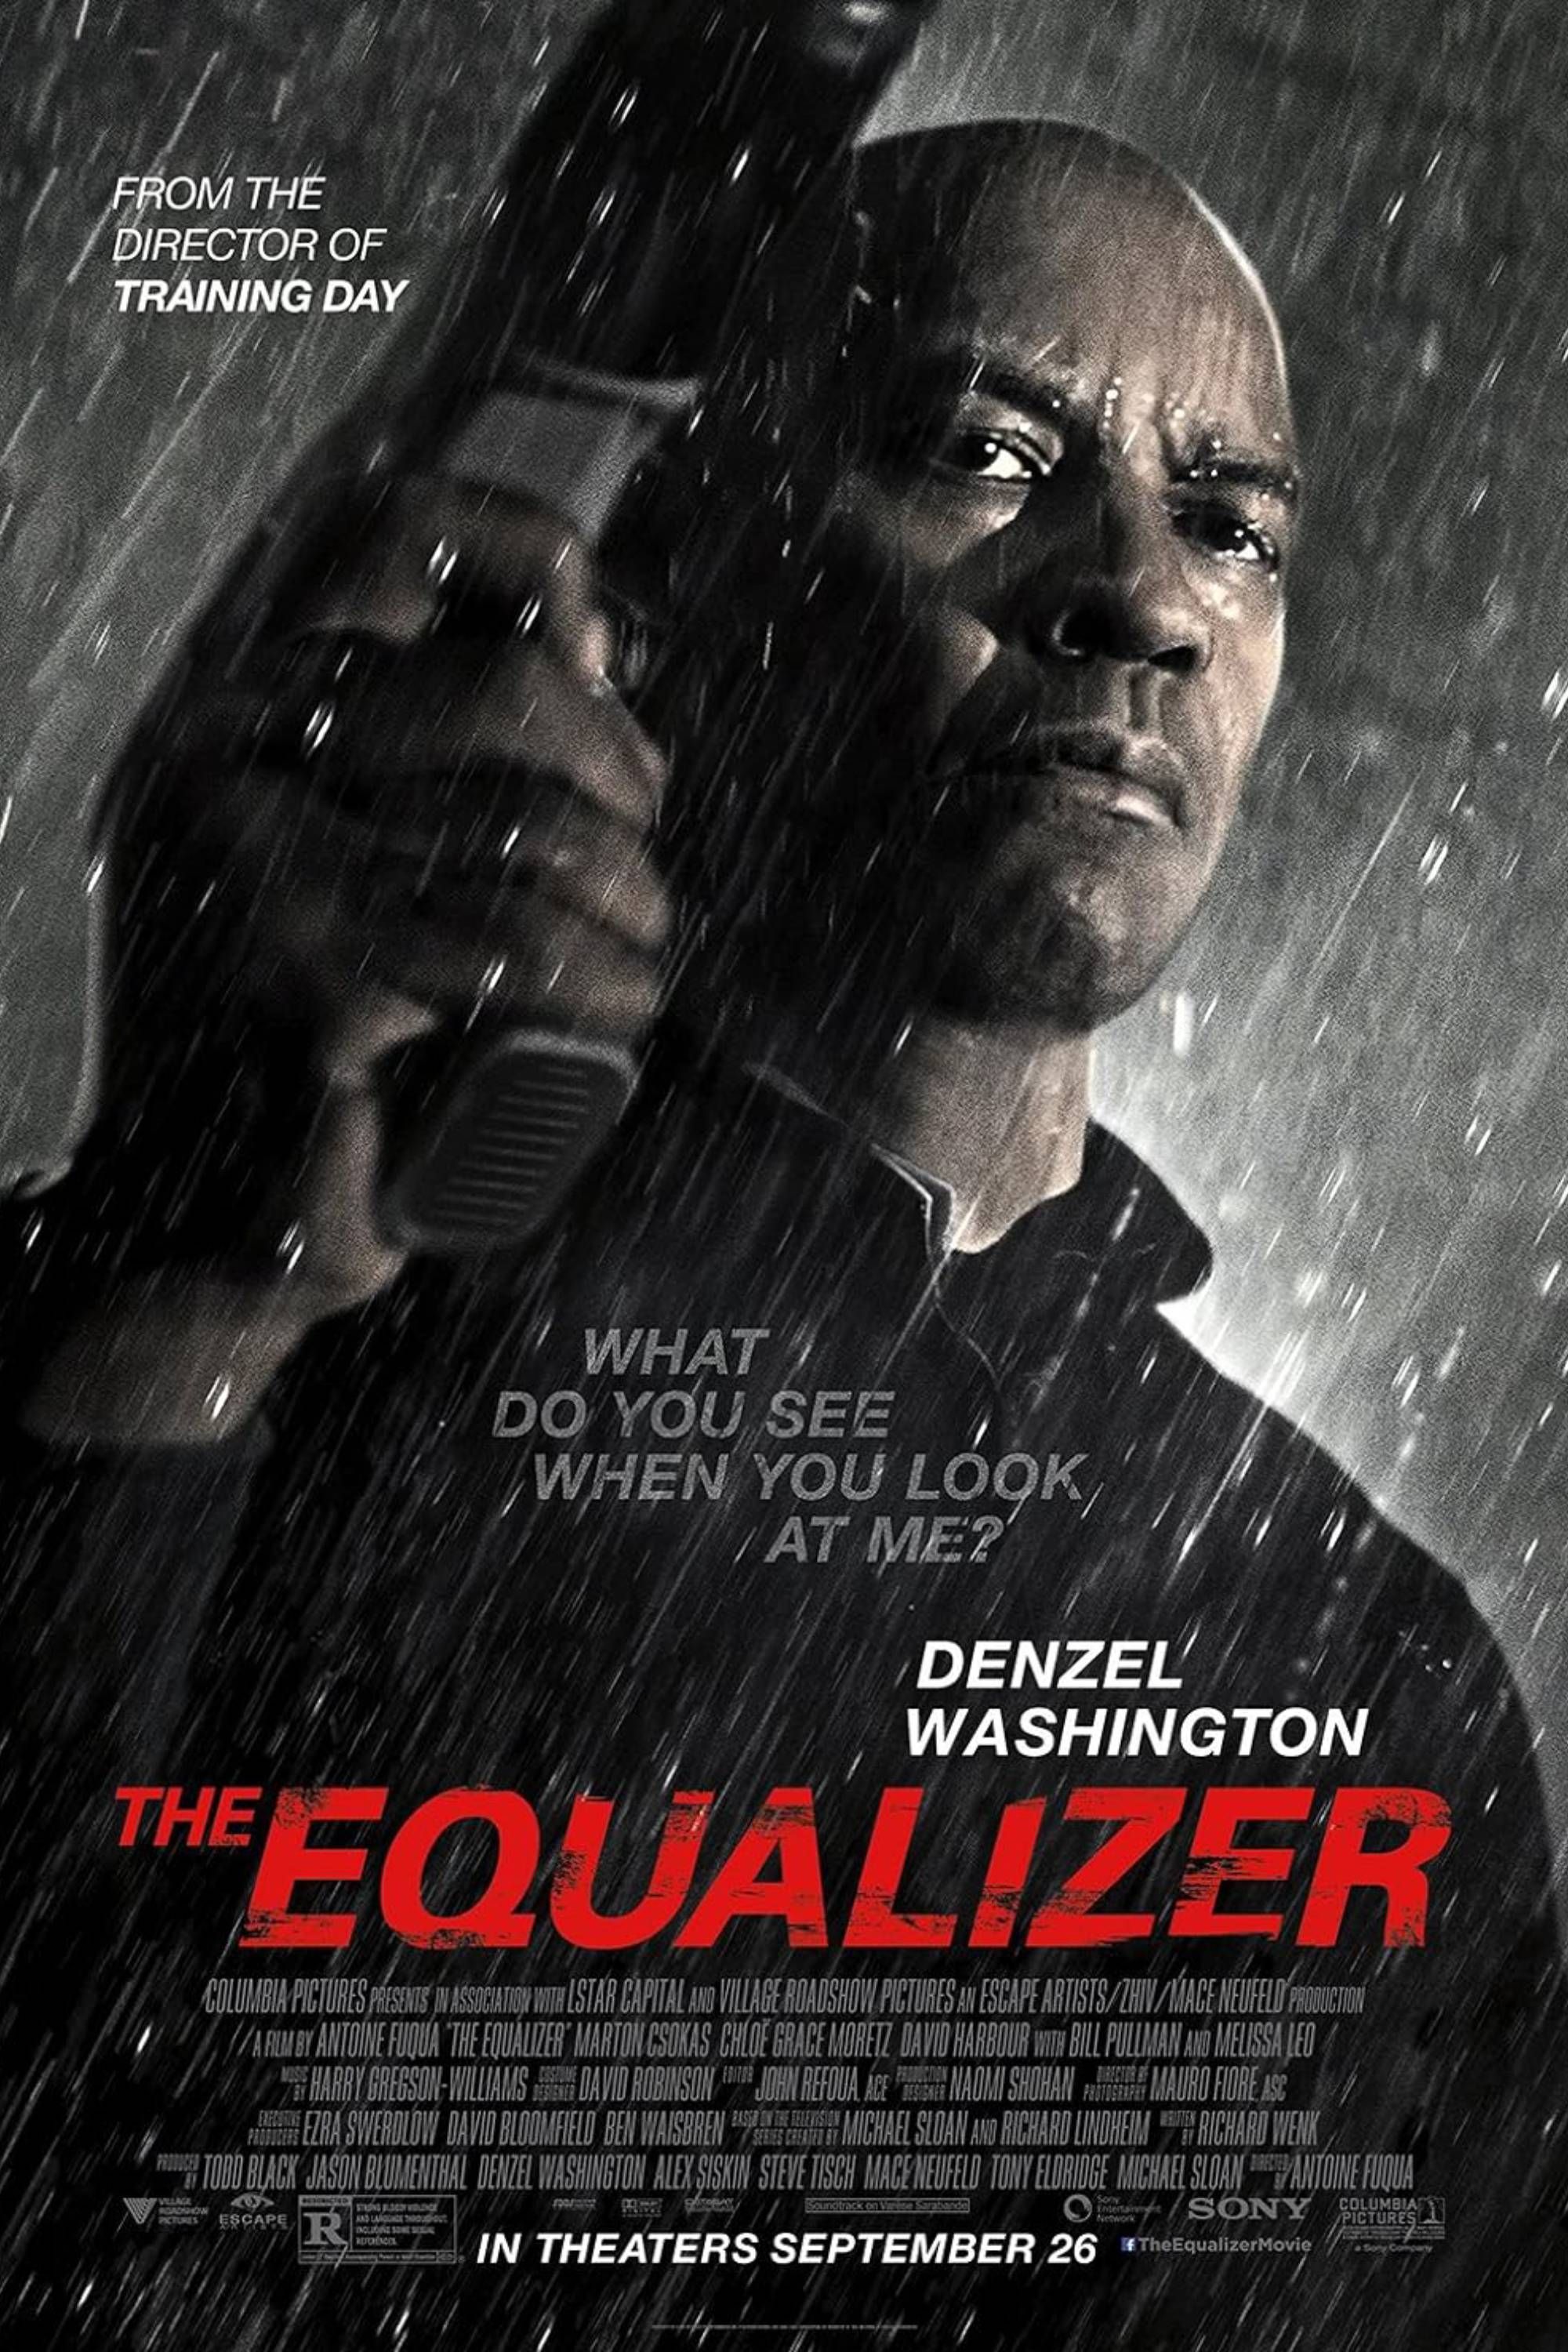 the-equalizer-2014-poster-denzel-washington-with-a-gun.jpg